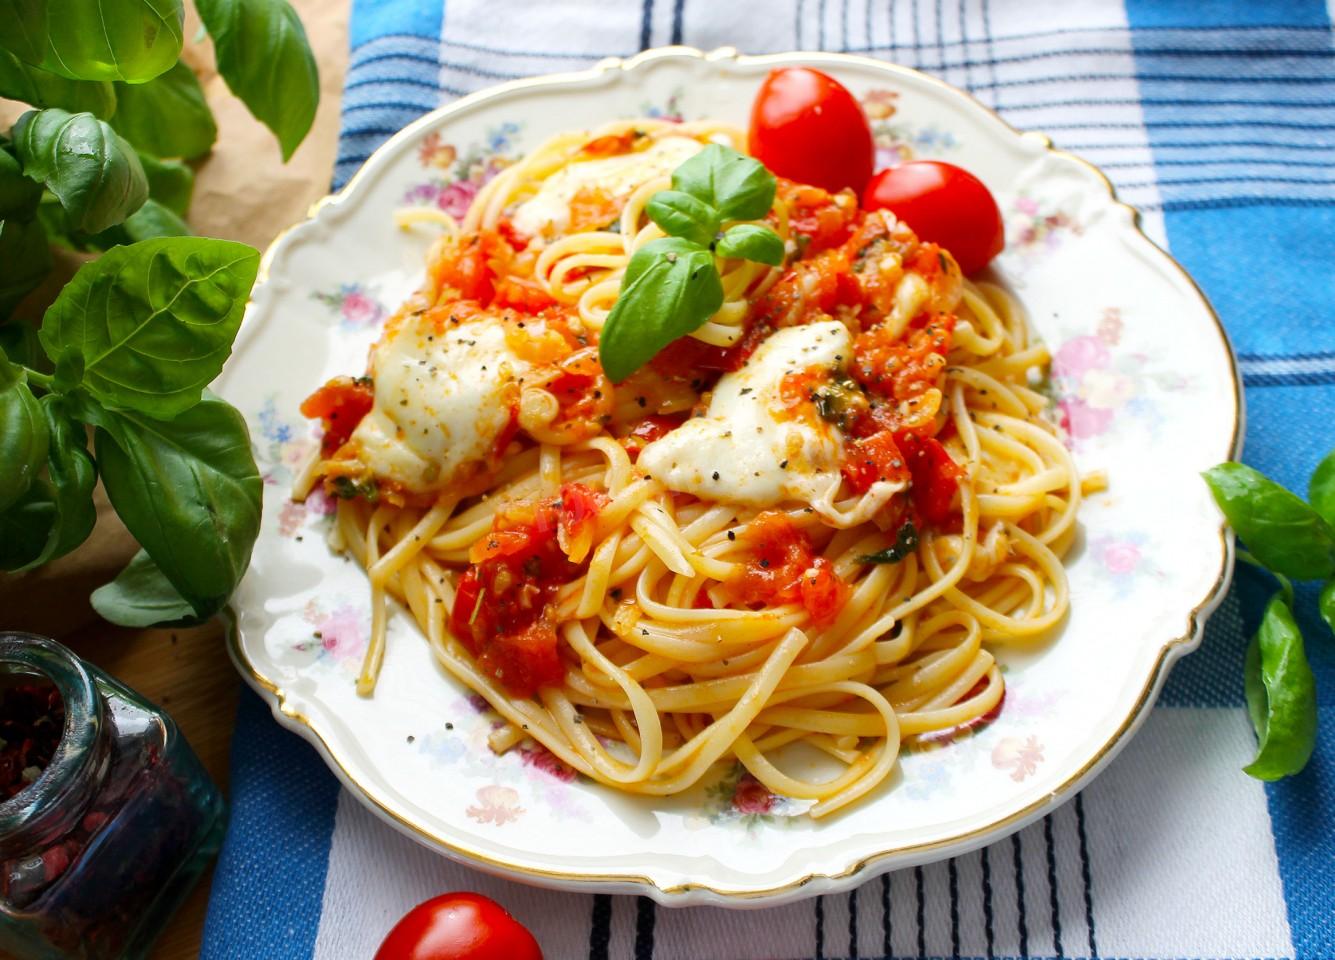 Рецепт спагетти с сыром и помидорами с фото пошагово и видео - 1000.meny